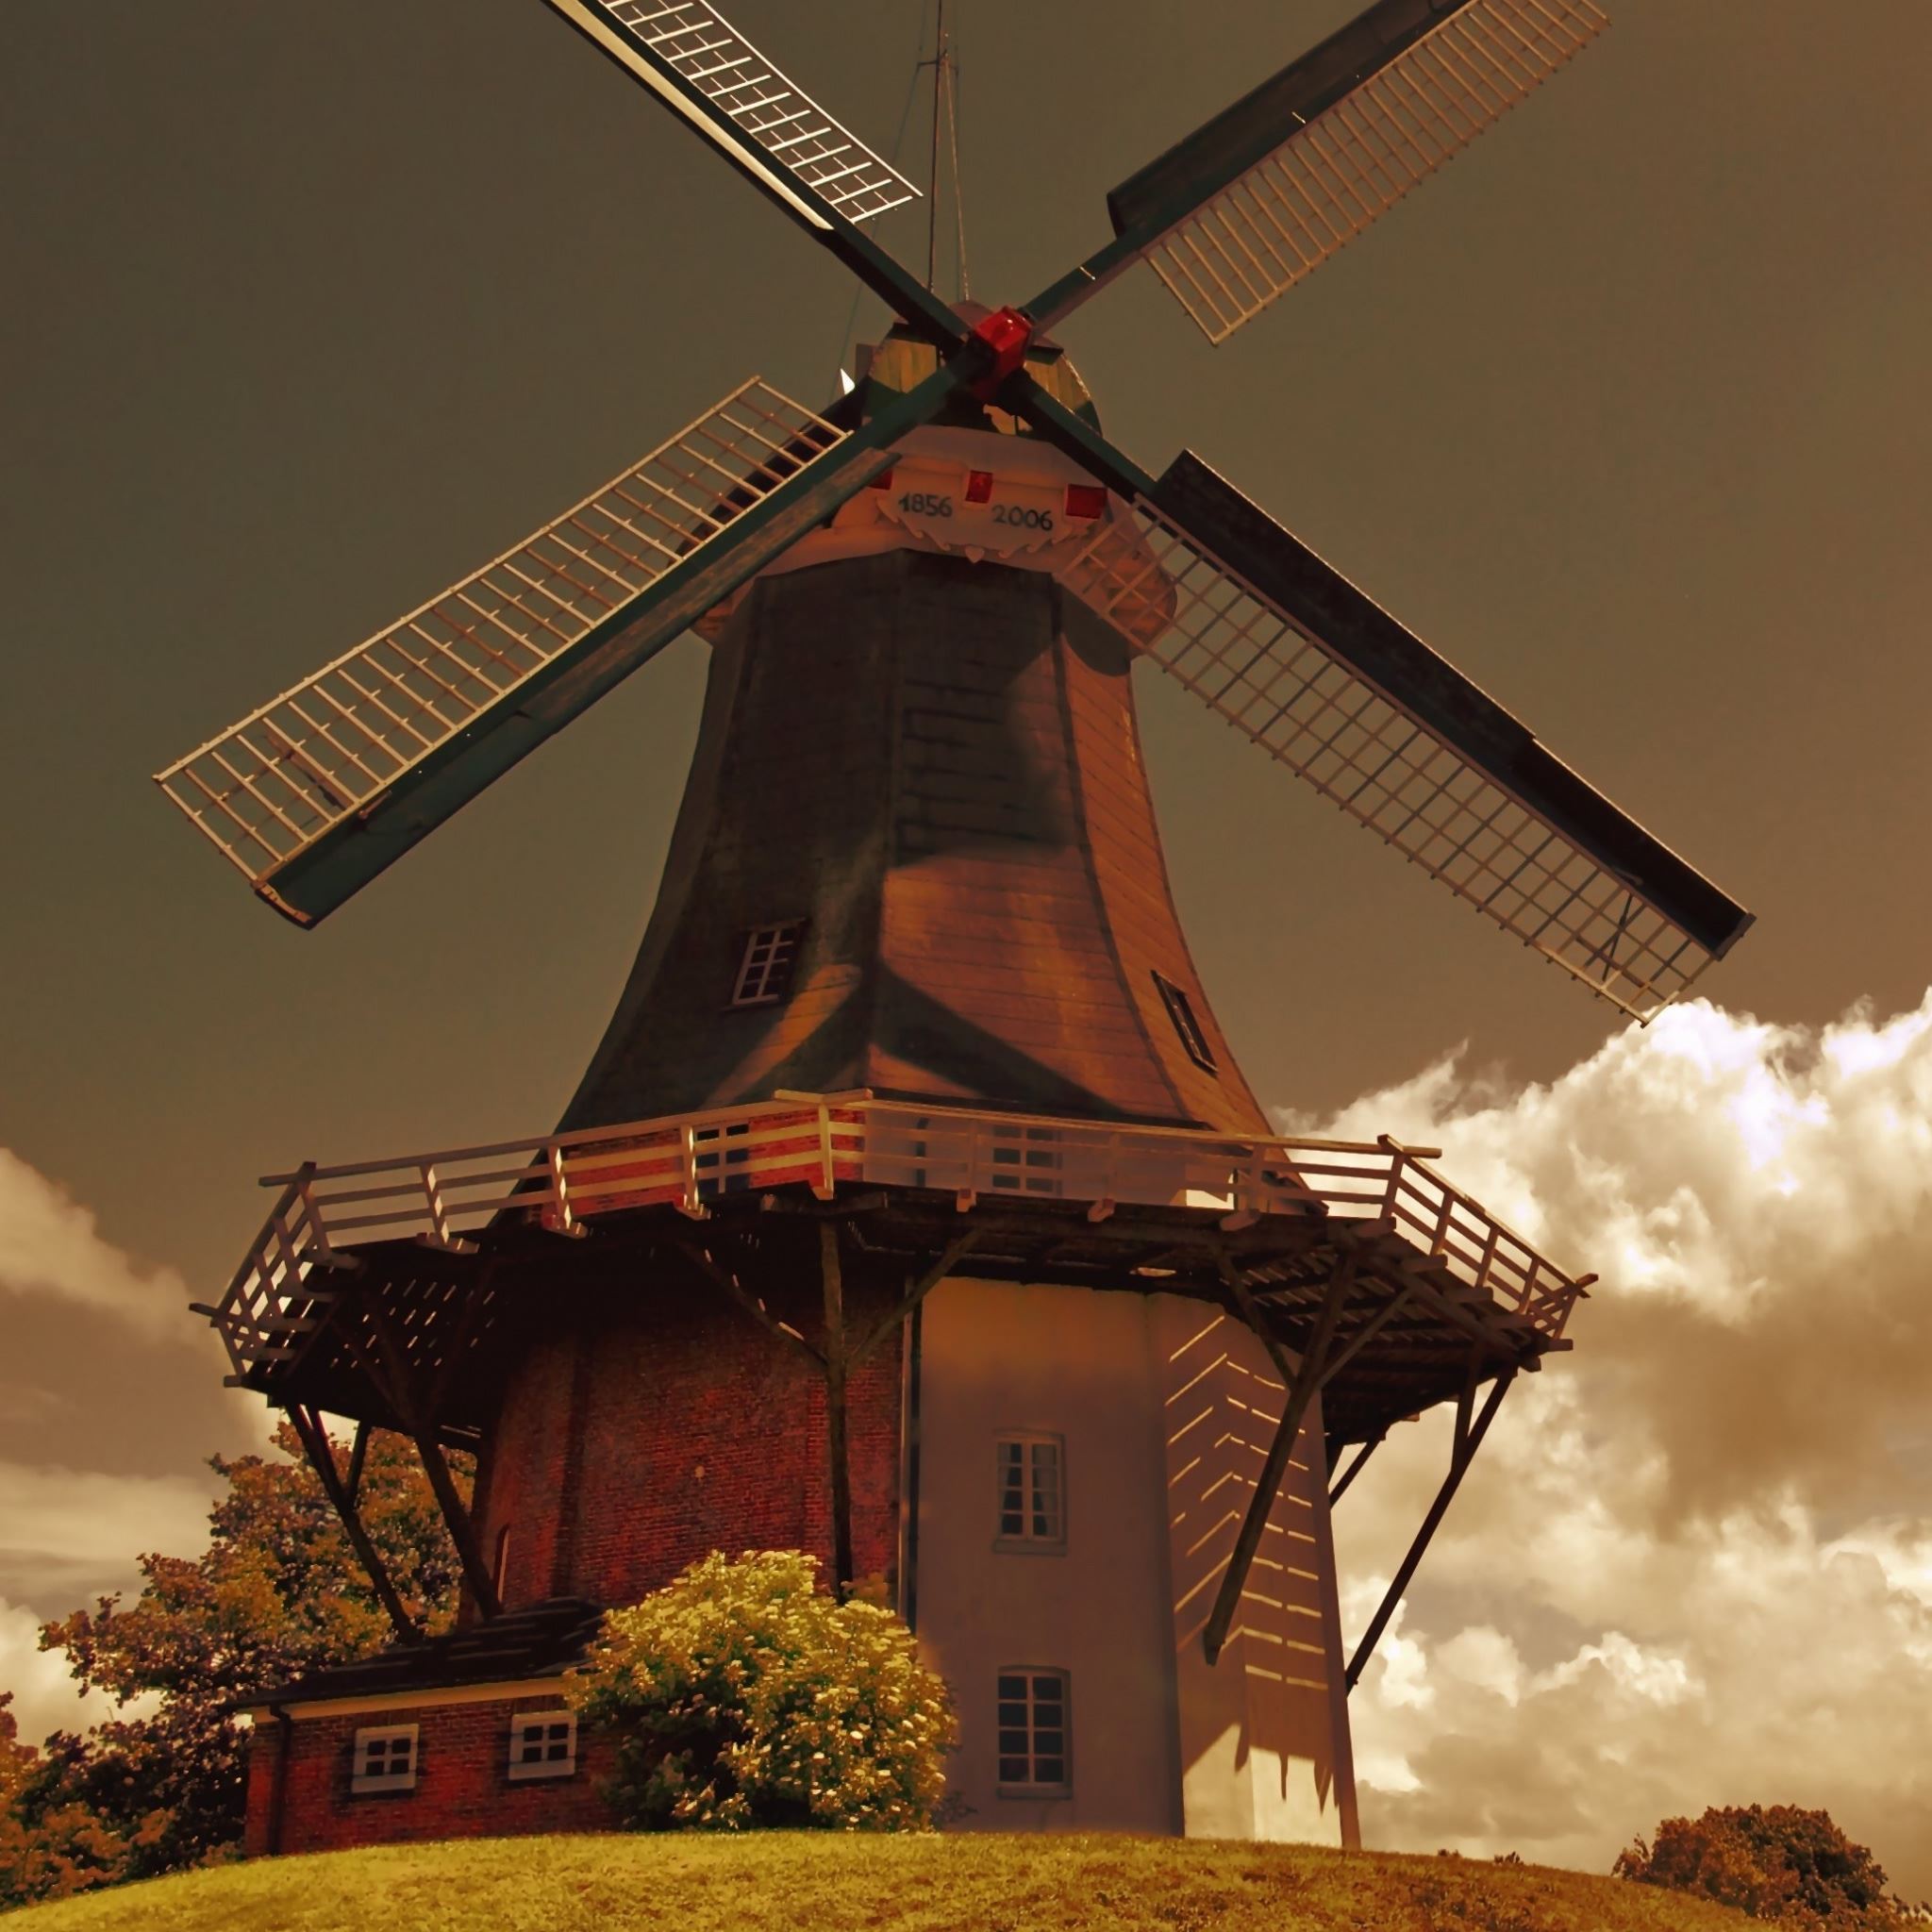 Windmills In The Netherlands iPad Air wallpaper 